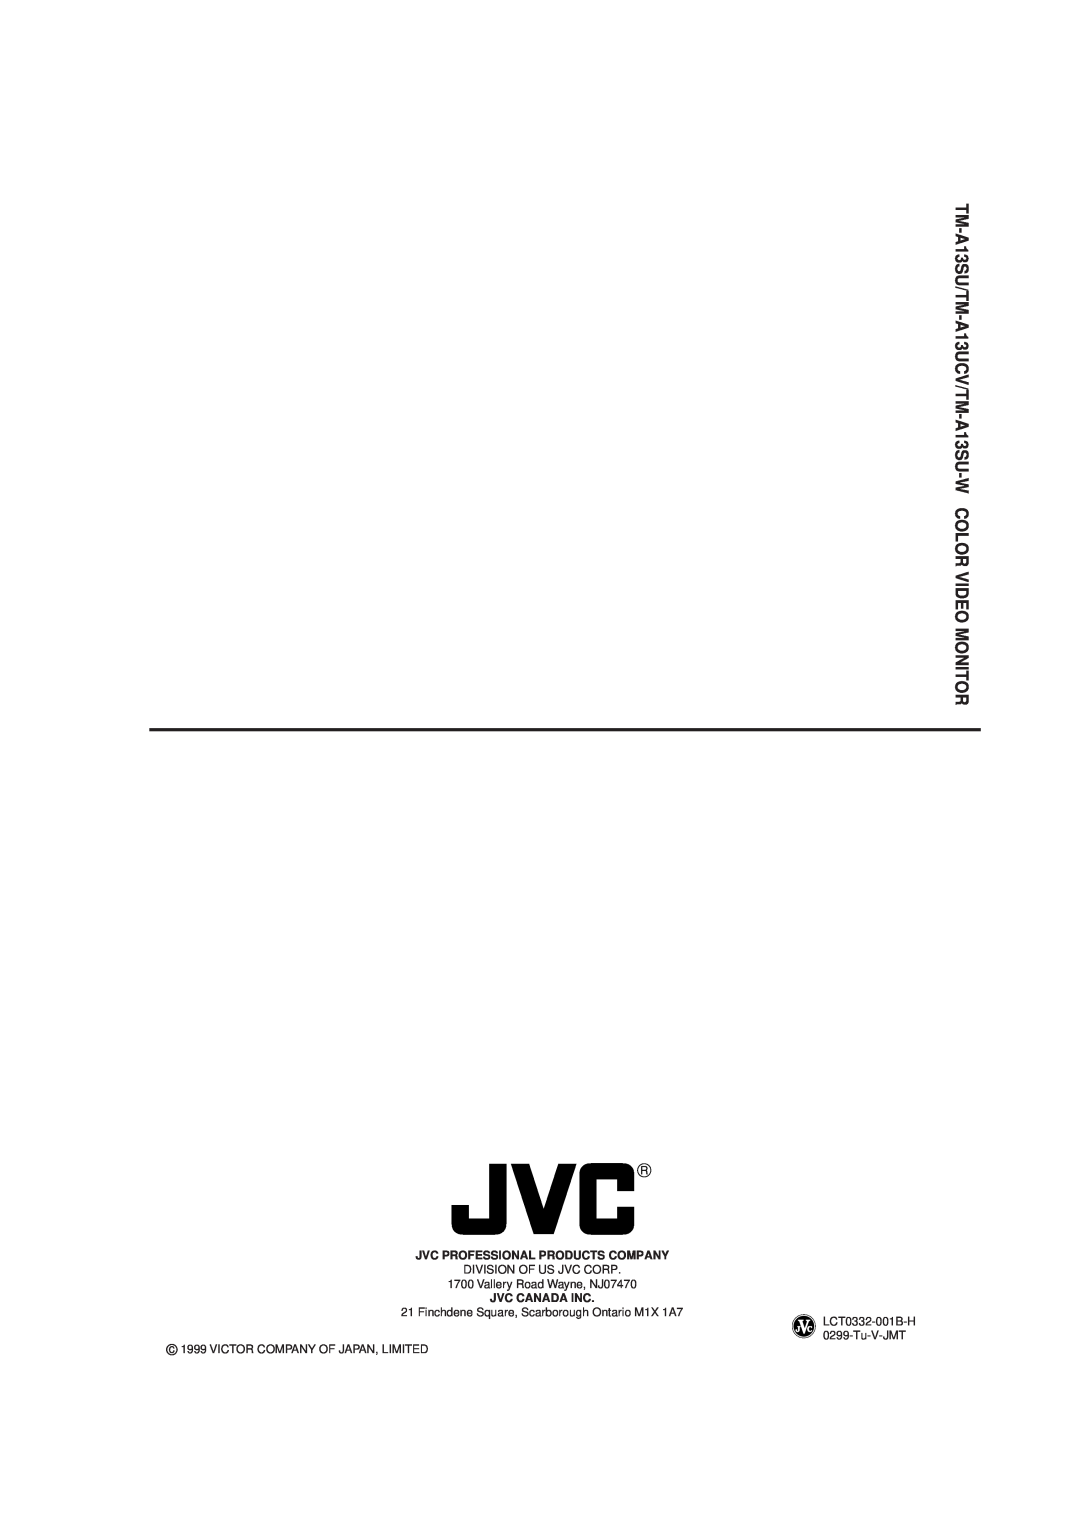 JVC manual TM-A13SU/TM-A13UCV/TM-A13SU-W COLOR VIDEO MONITOR, Jvc Professional Products Company, Jvc Canada Inc 